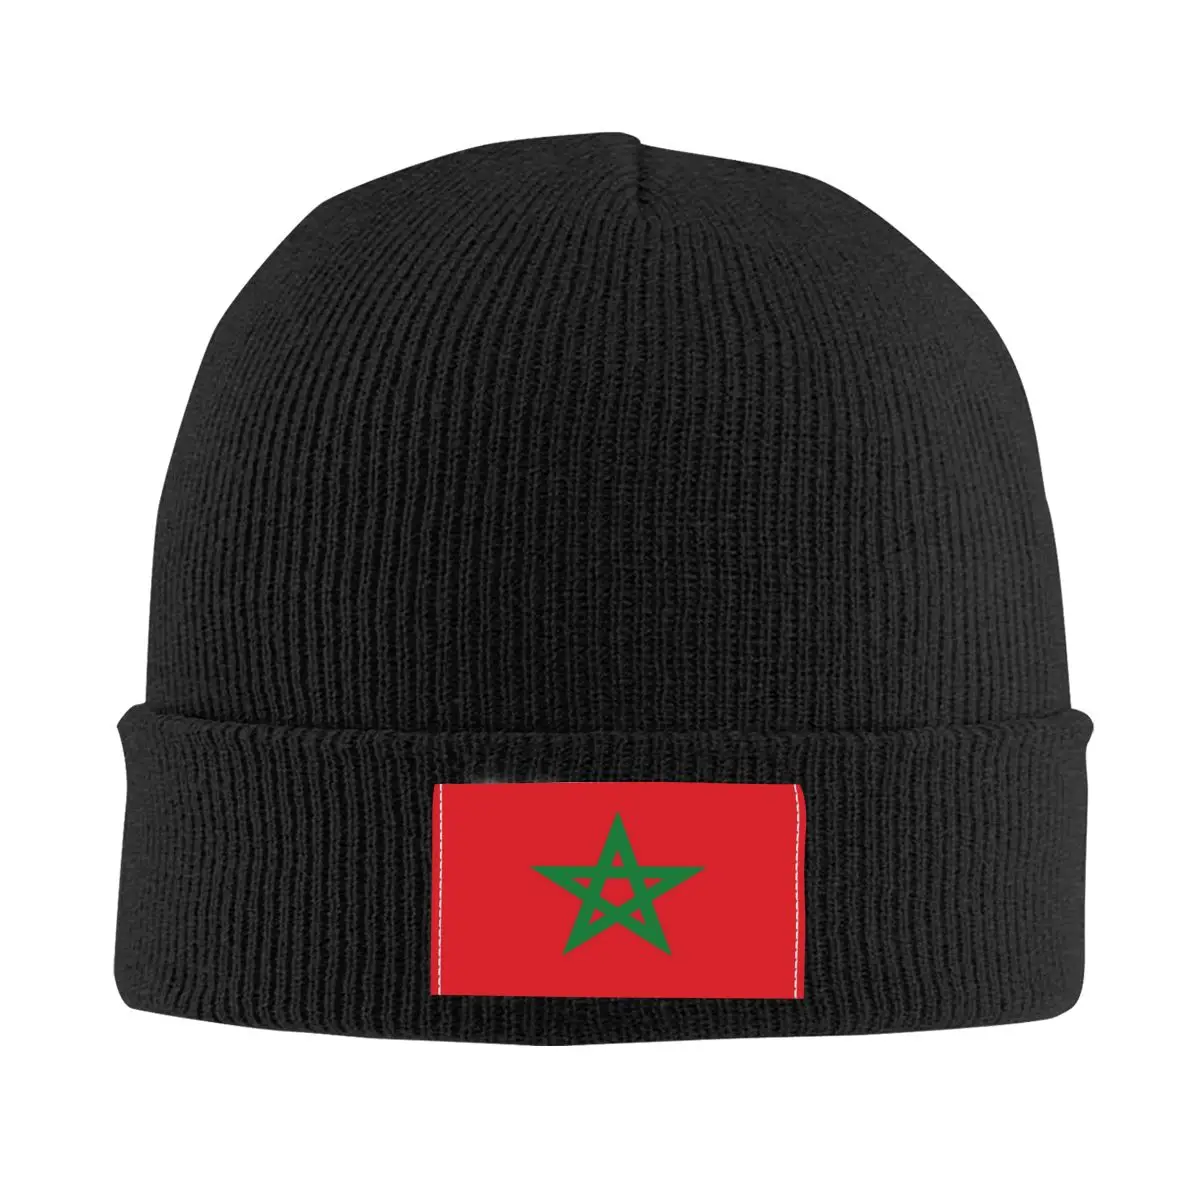 The Flag Of Morocco Bonnet Hats Cool Knitting Hat For Men Women Warm Winter Skullies Beanies Caps 1